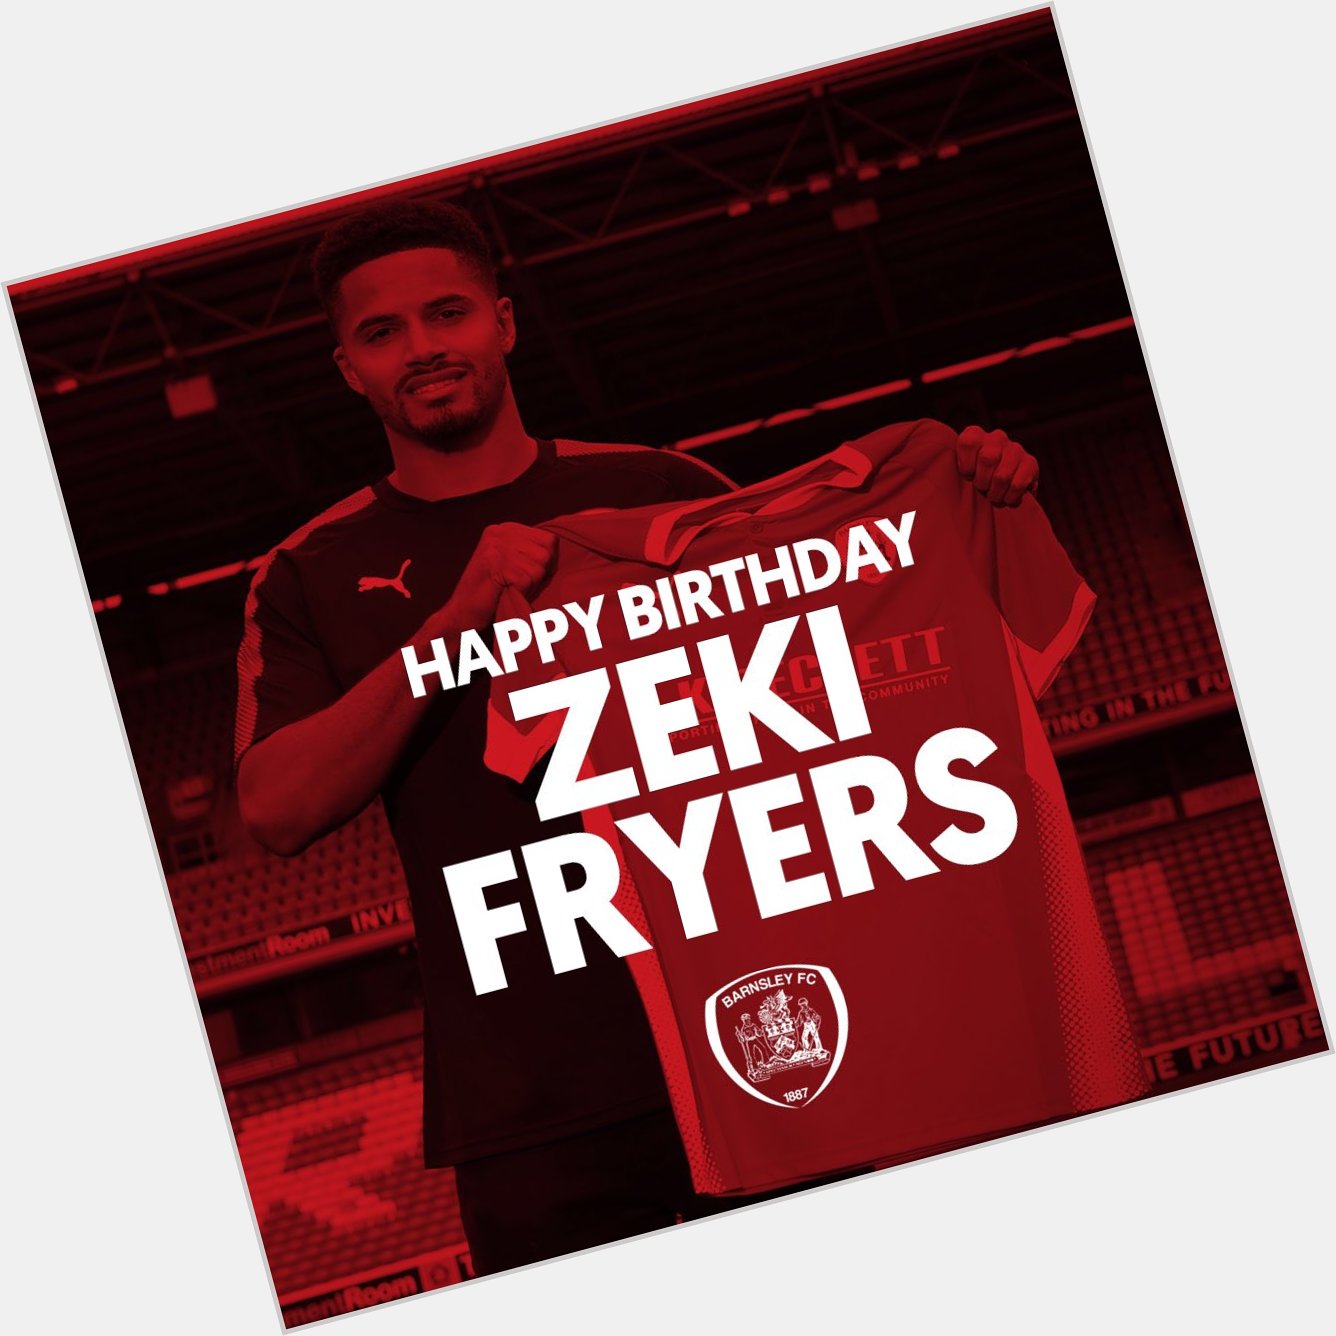 2  5  | We would like to wish Happy Birthday to Reds defender Zeki Fryers!  